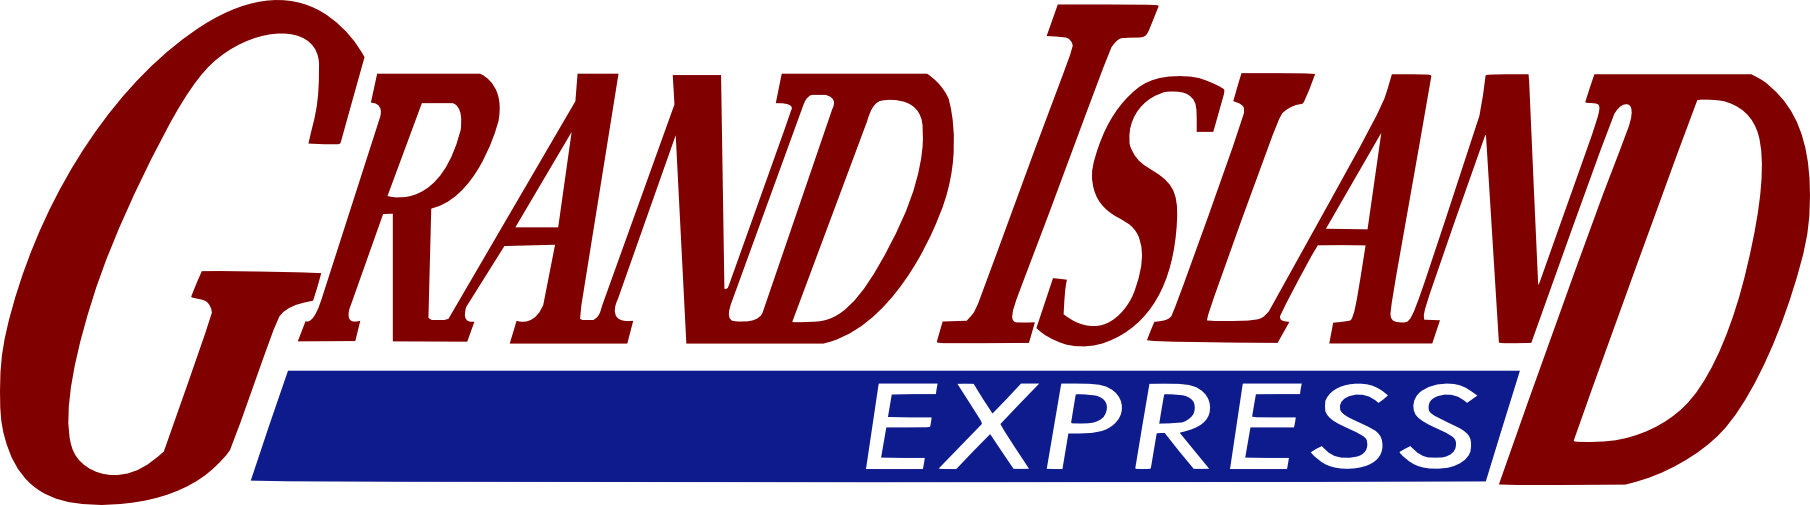 GI Express/GI Truck, Inc. and GIX Logistics